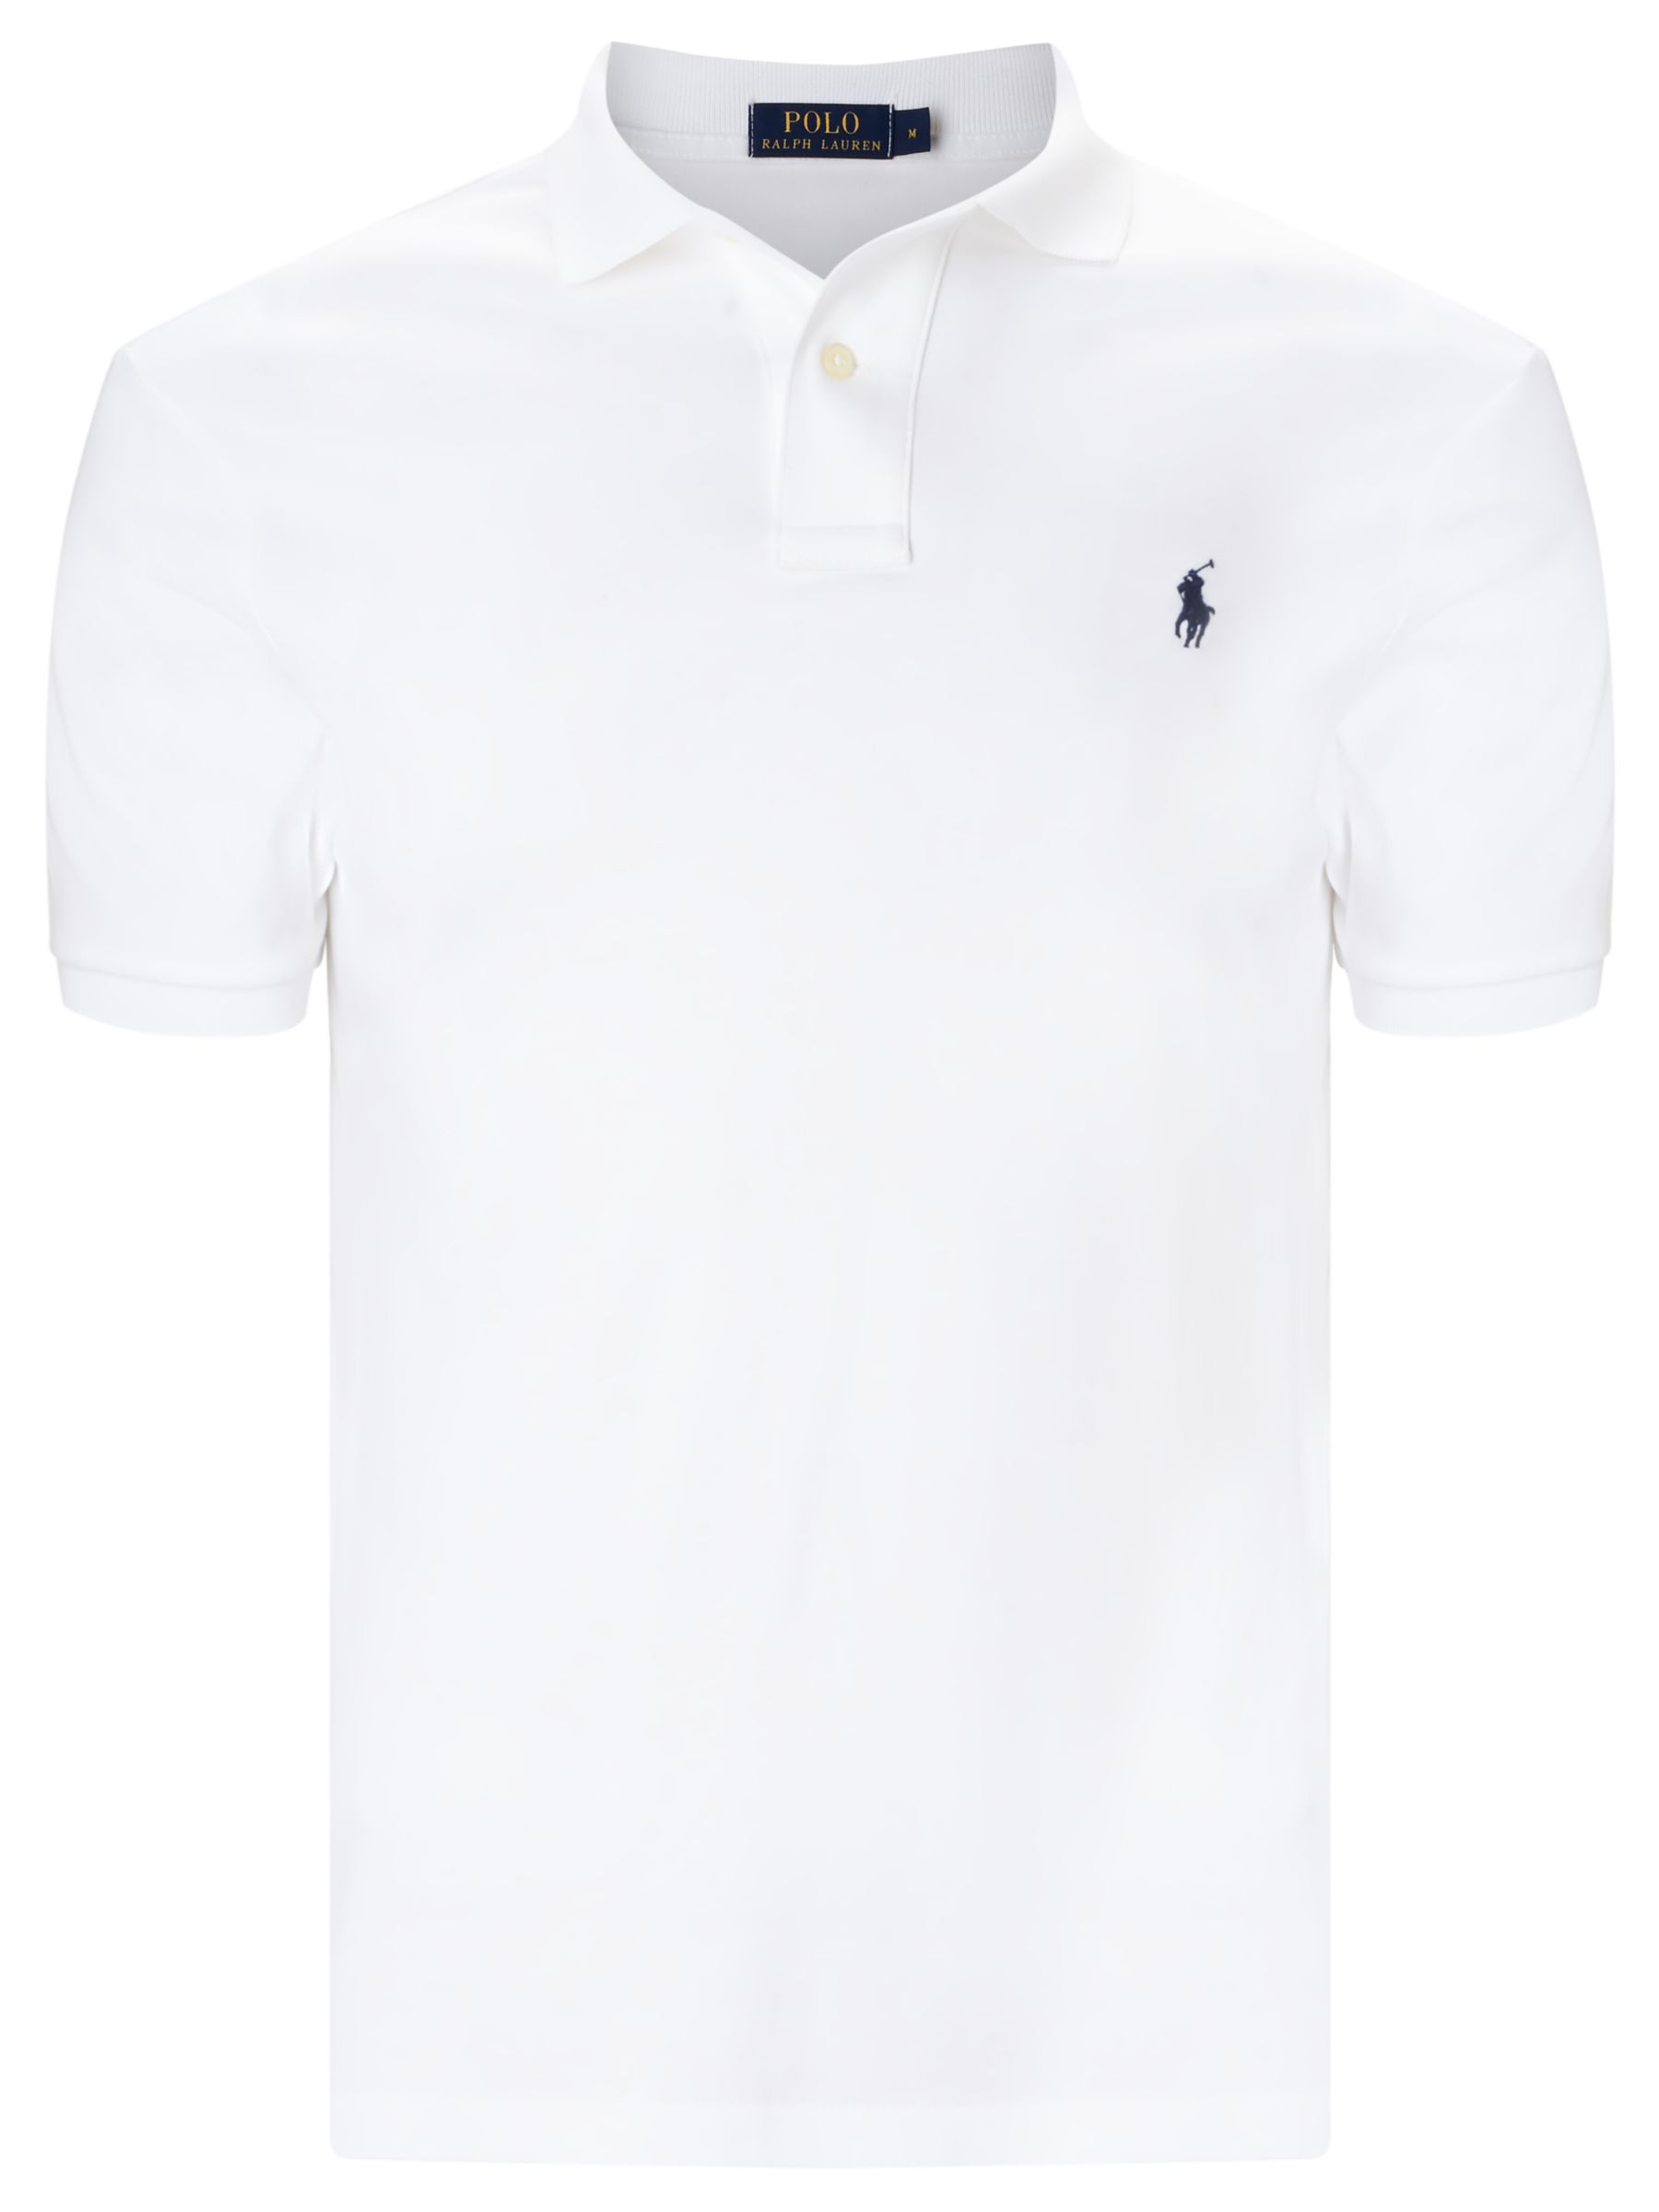 Polo Ralph Lauren Pima Cotton Soft-Touch Polo Shirt, White